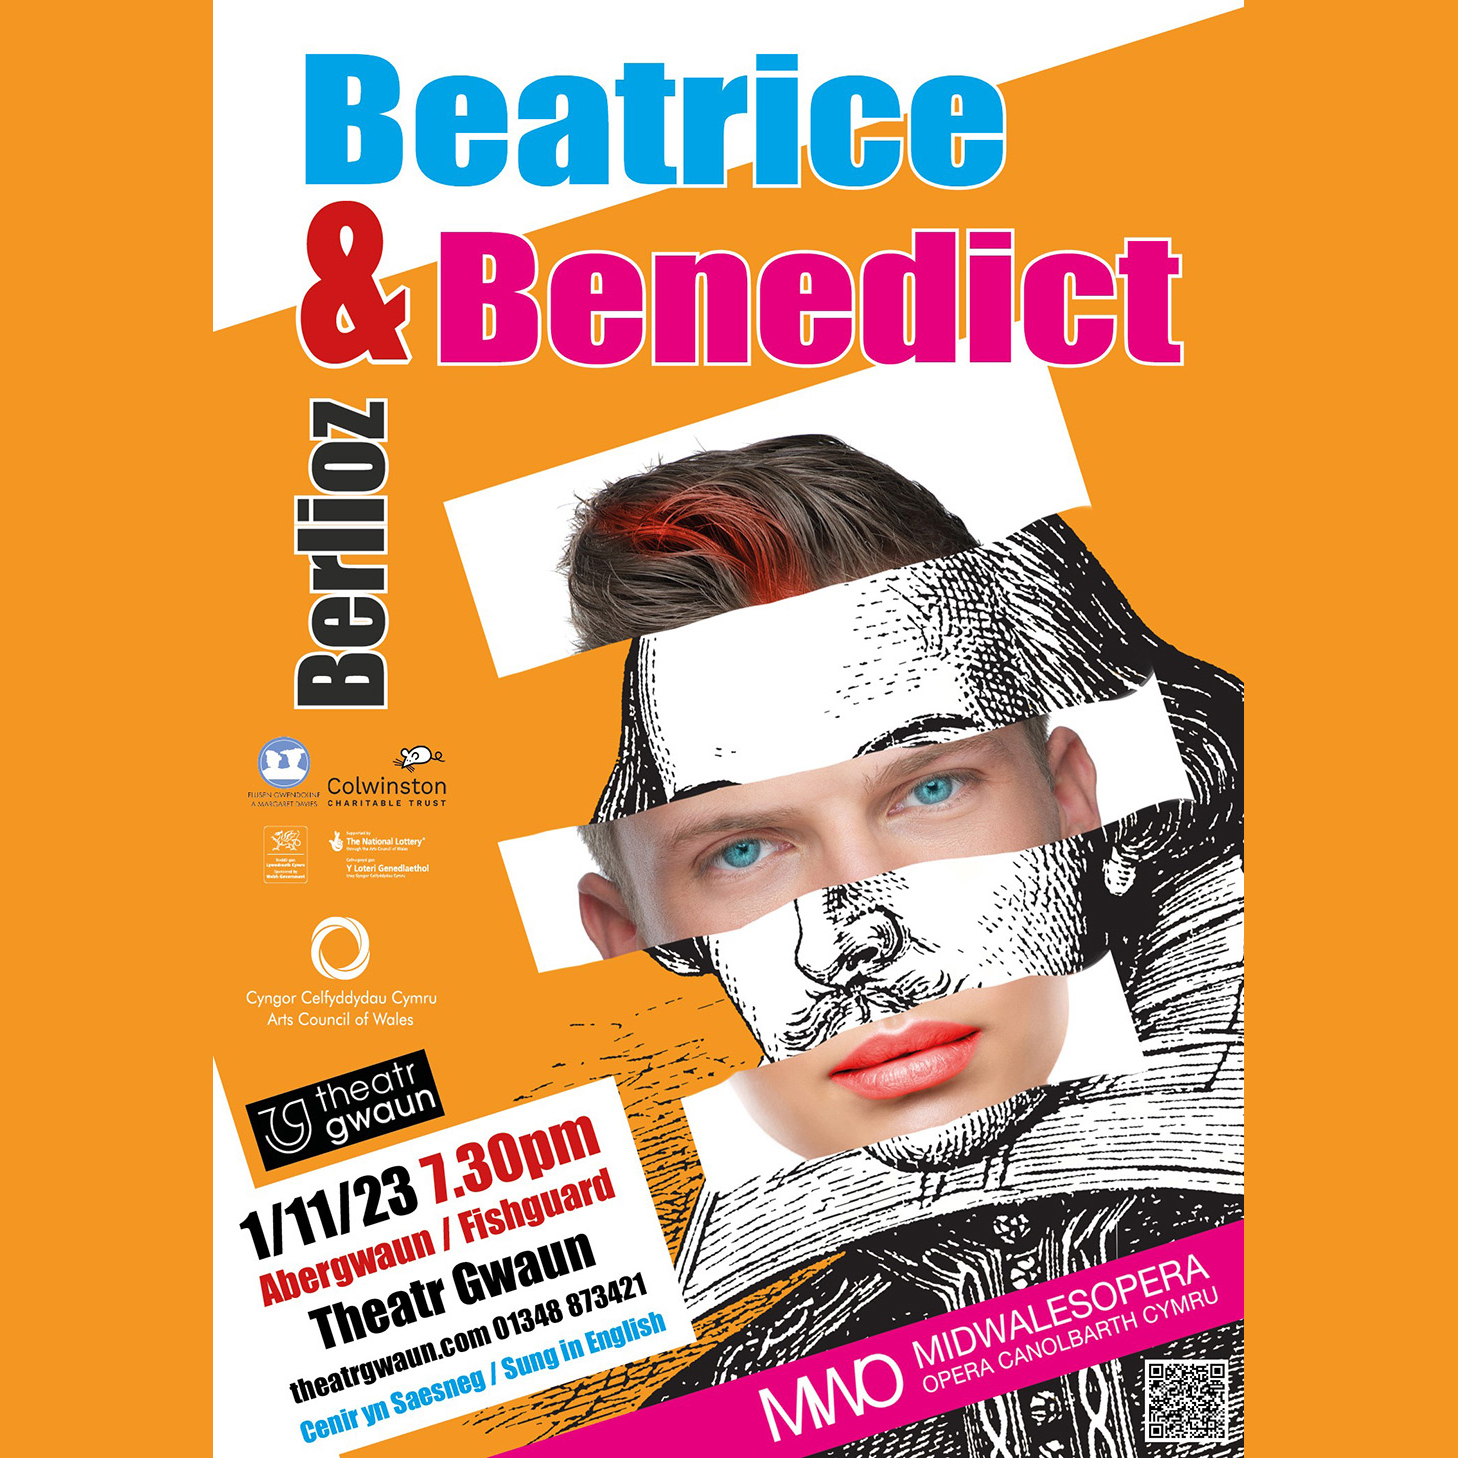 Mid Wales Opera present Berlioz’s Beatrice and Benedict – Theatr Gwaun